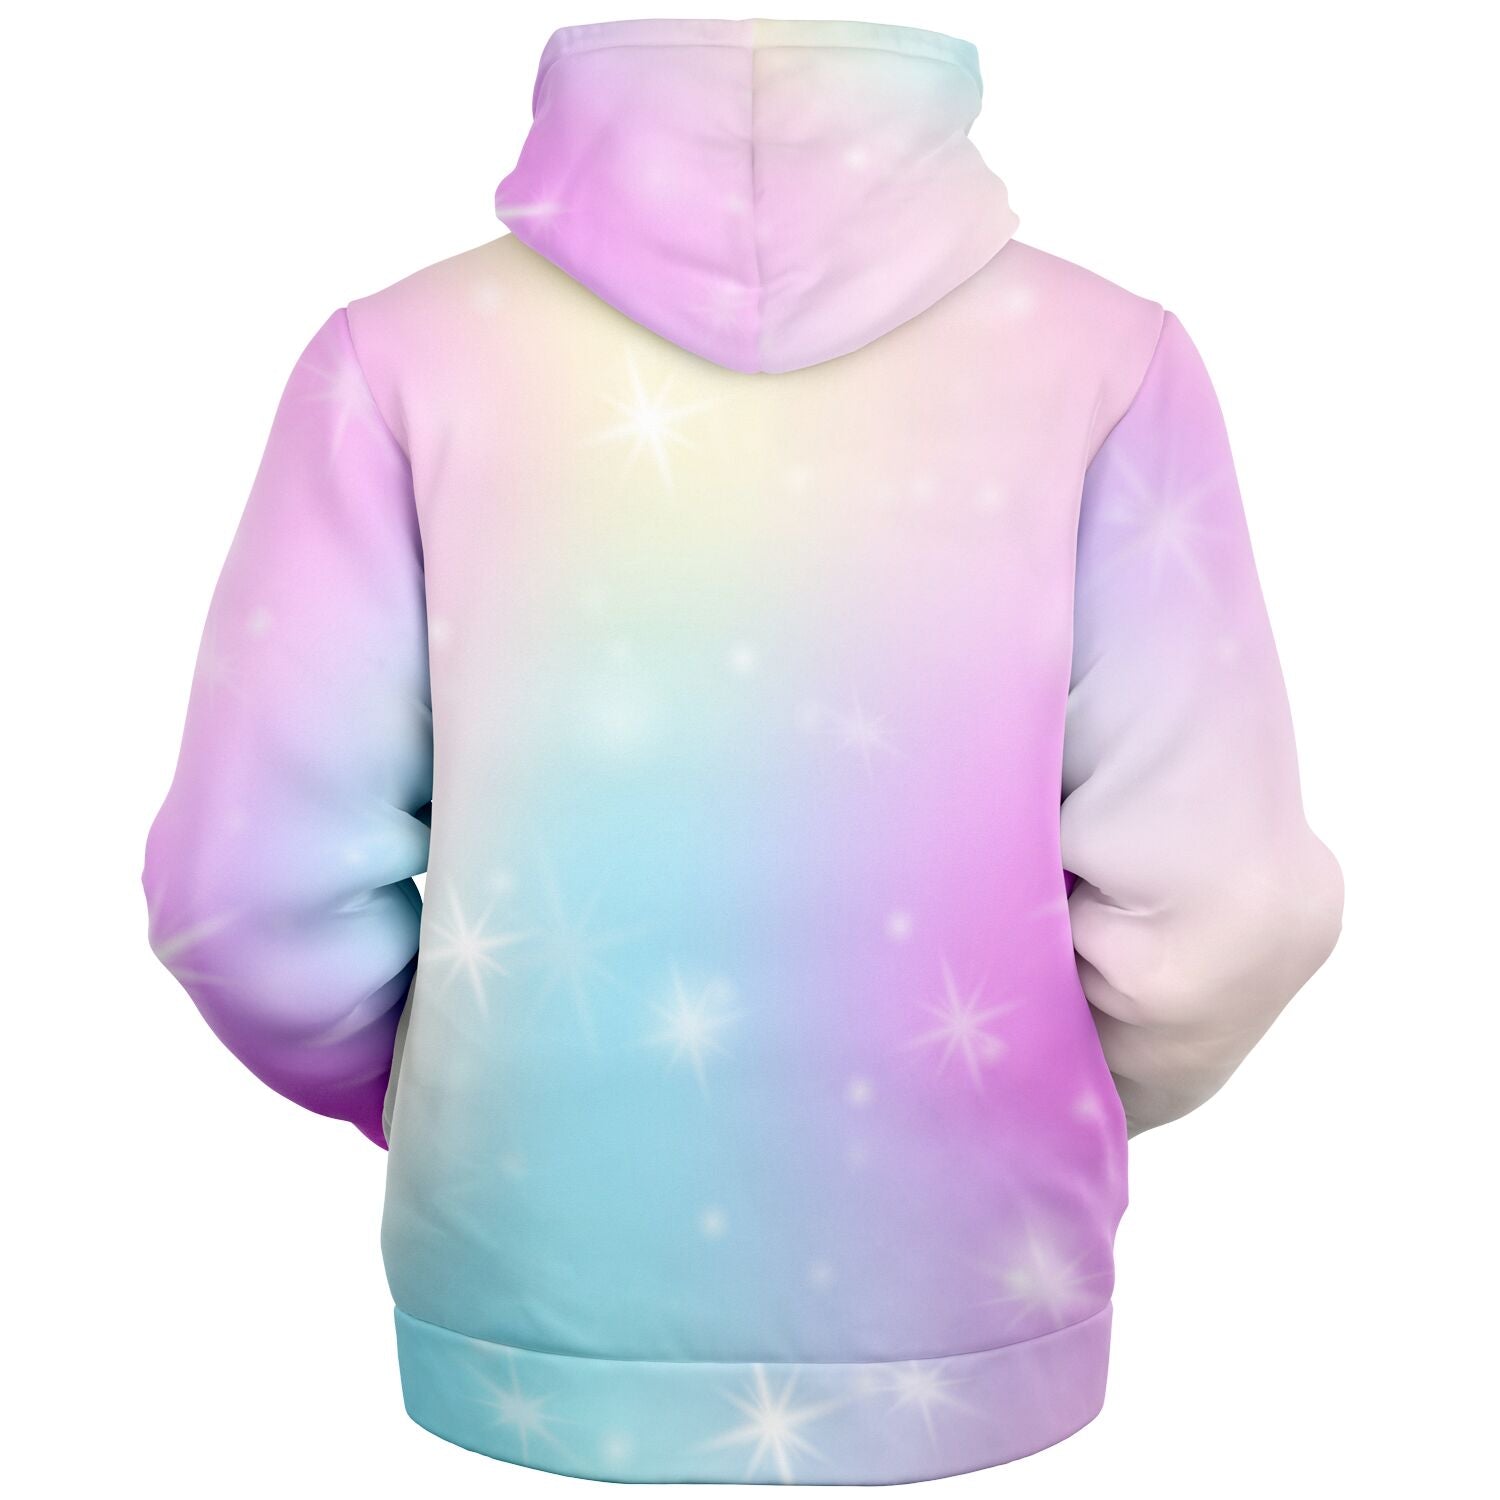 Bright Pastel Rainbow with Stars Colors Jacket - Custom